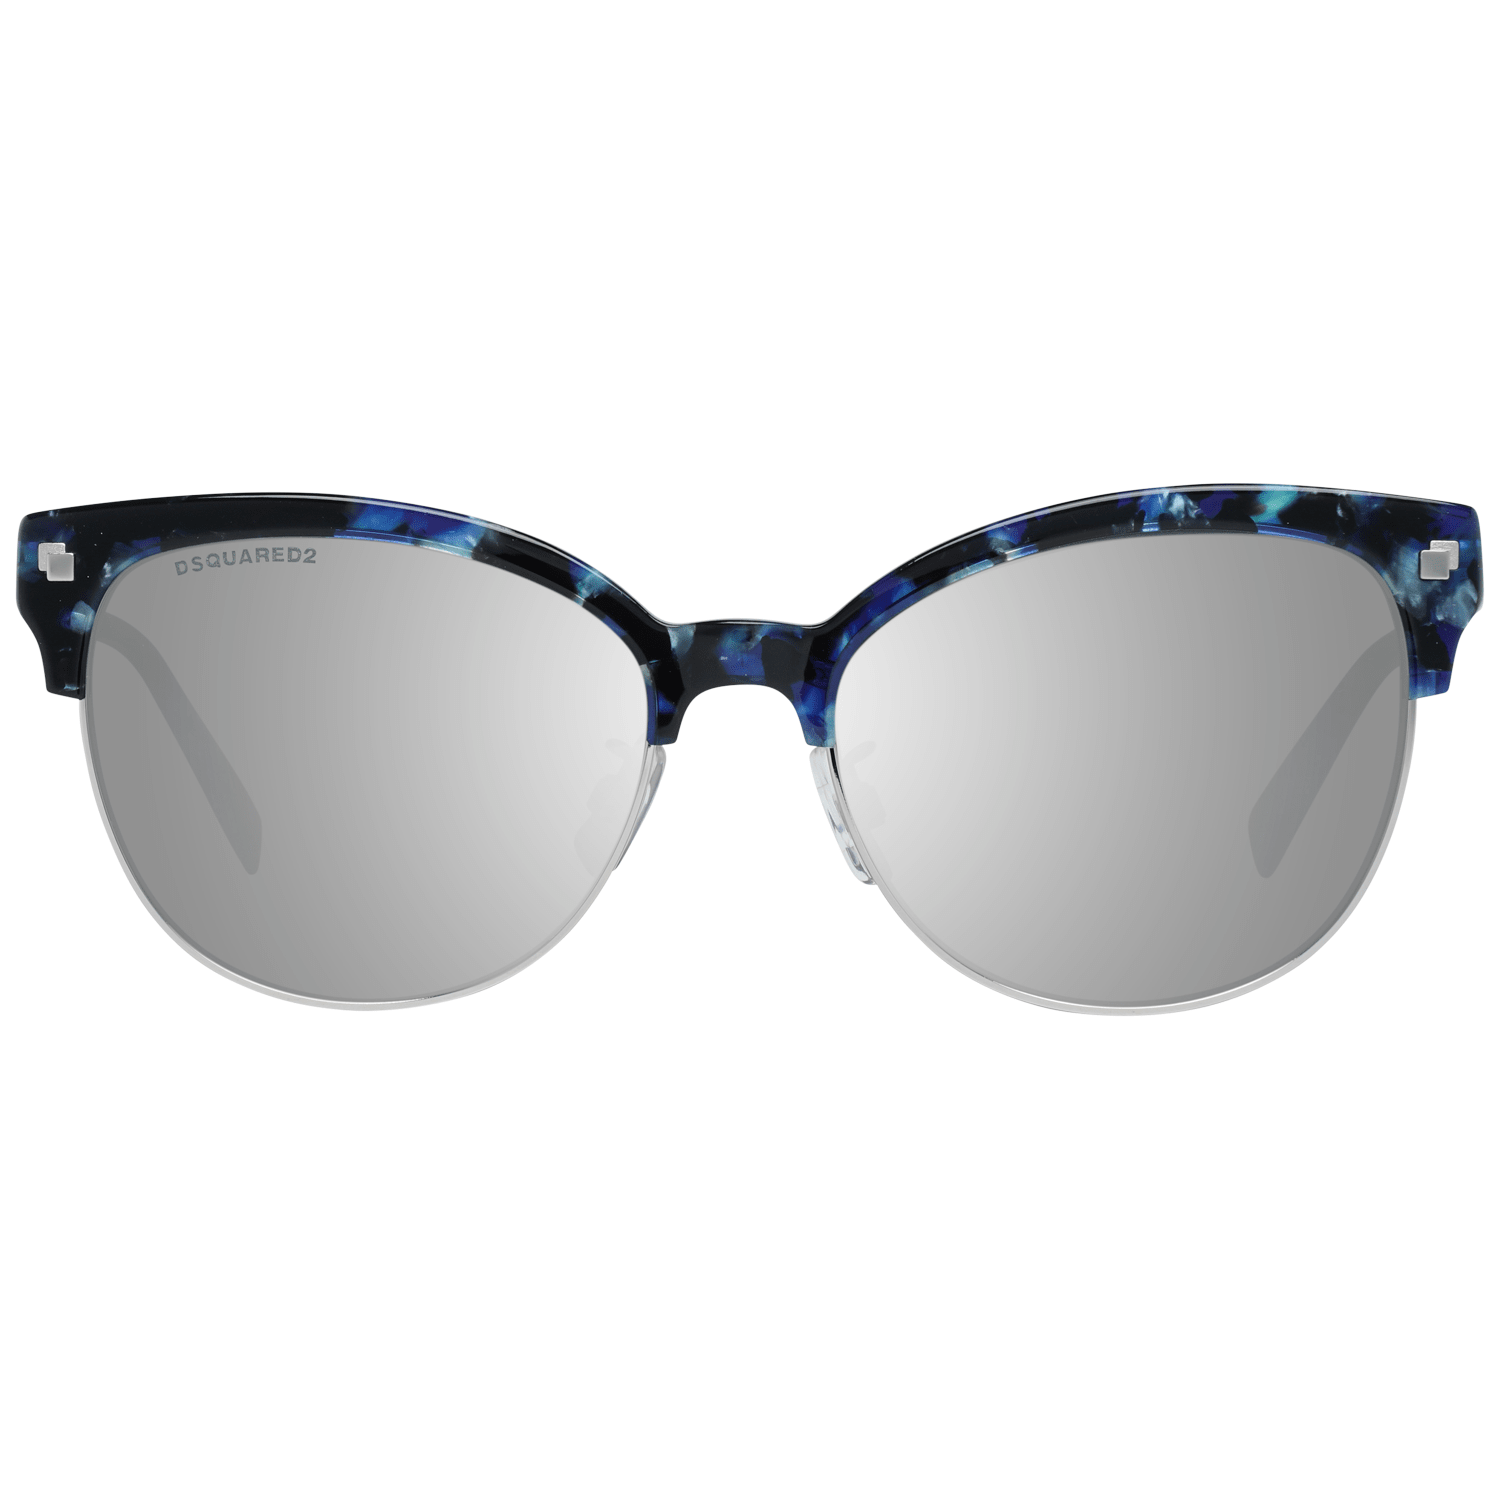 DSquared² Blue Sunglasses Save 60% Womens Sunglasses DSquared² Sunglasses 